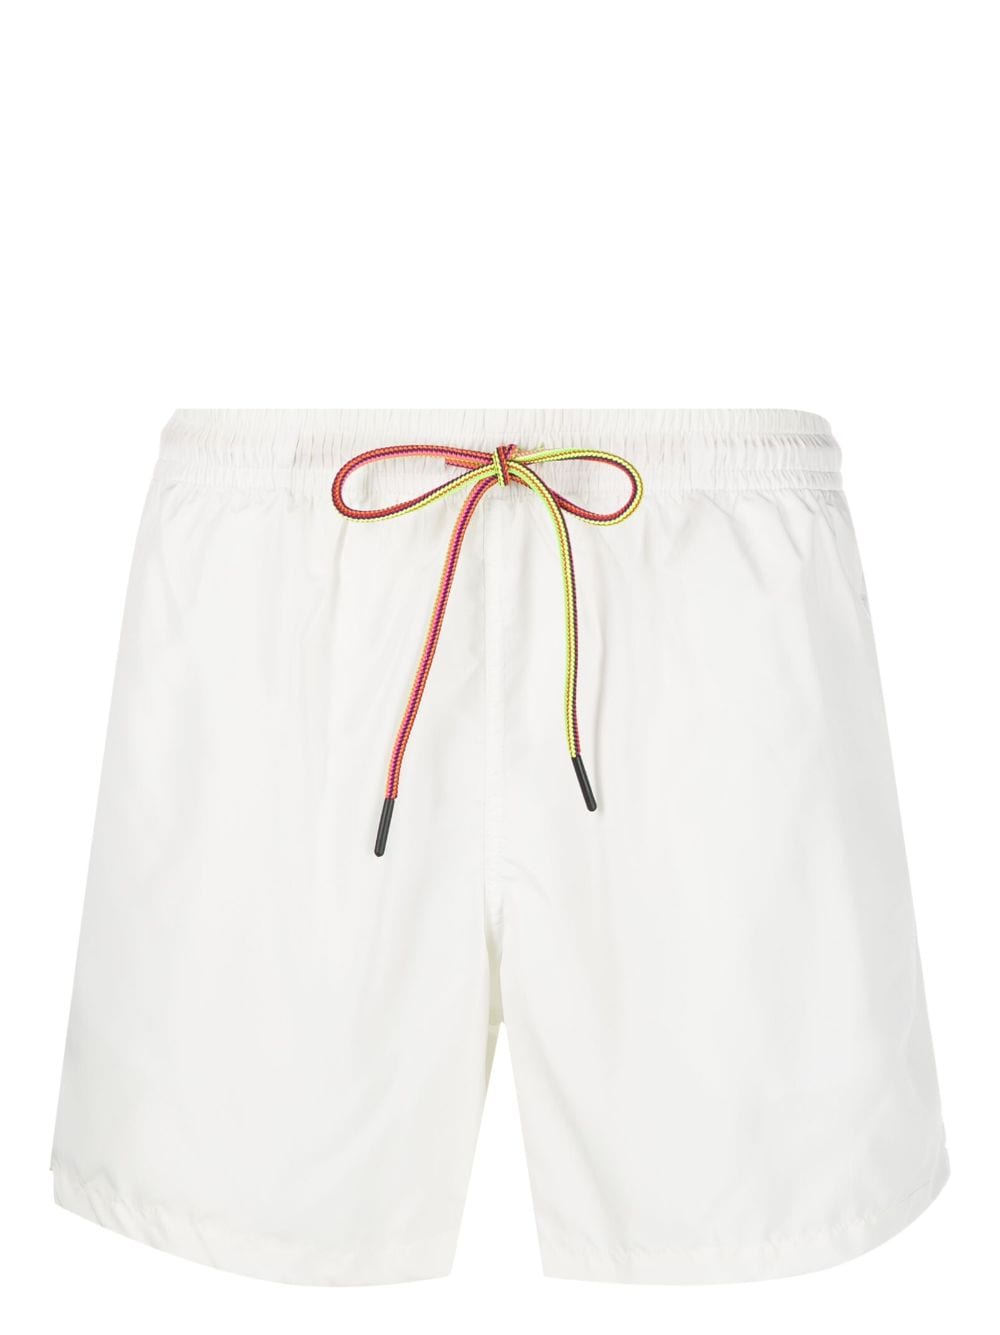 Nos Beachwear drawstring swim shorts - White